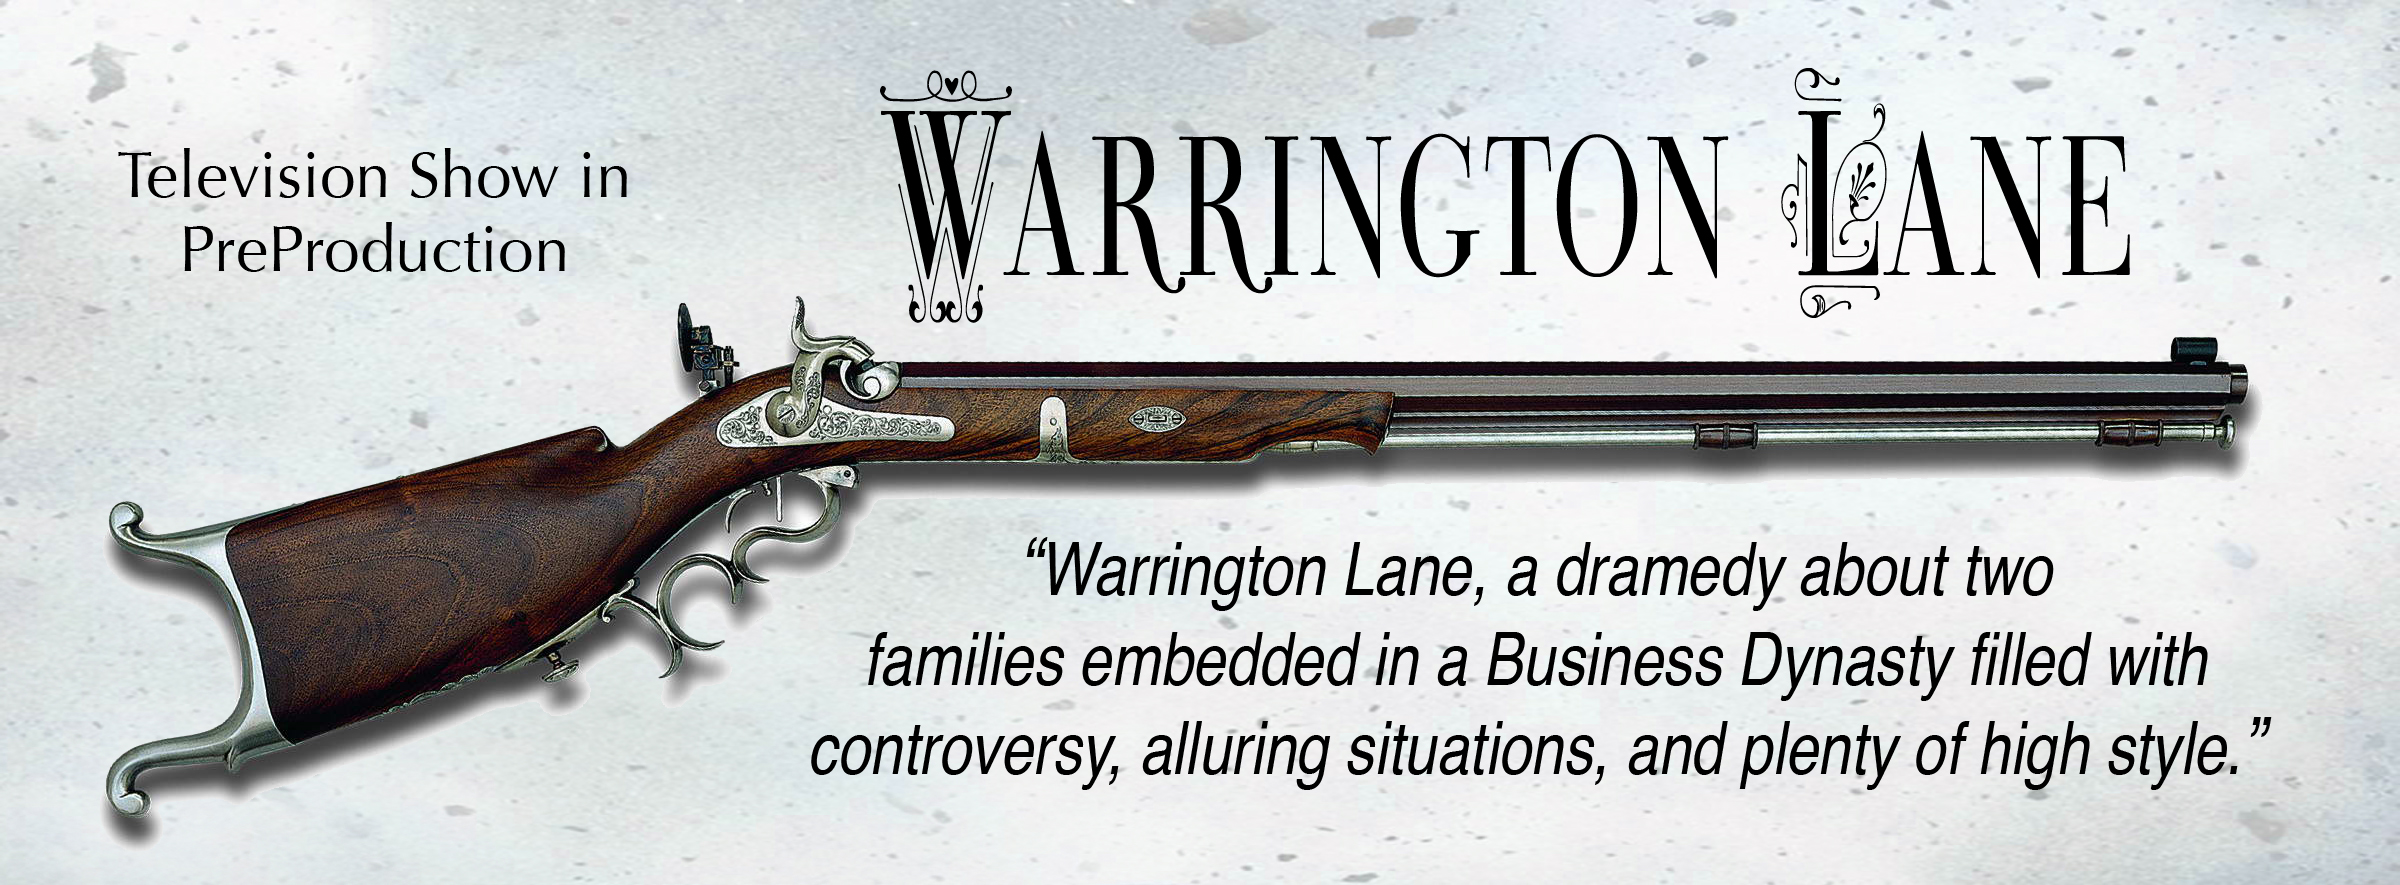 WarringtonLane